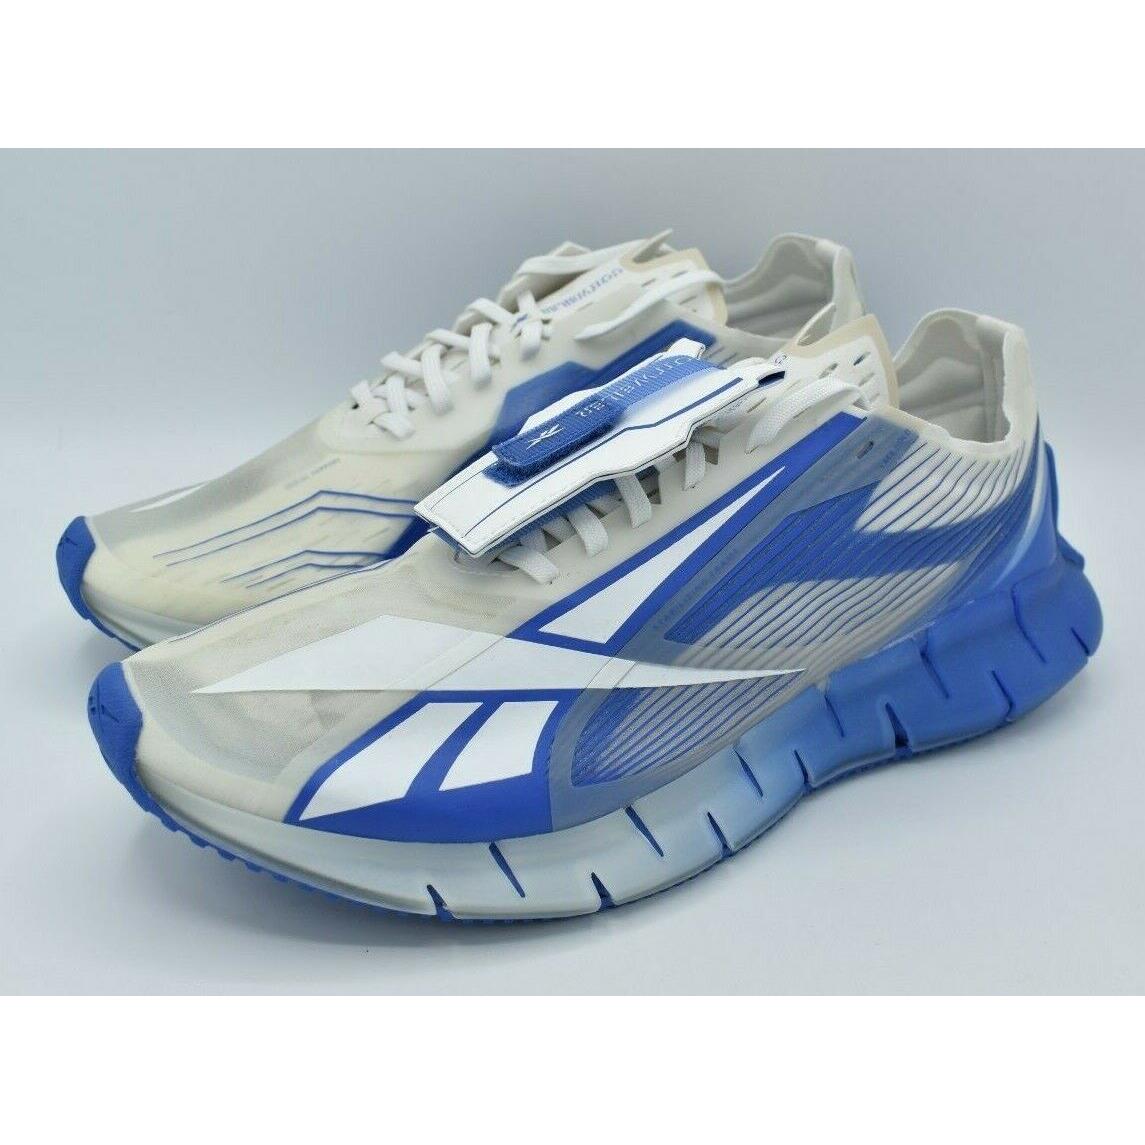 Reebok Mens Size 9.5 Cottweiler Zig 3D Storm X Blue Blast White Running Shoes